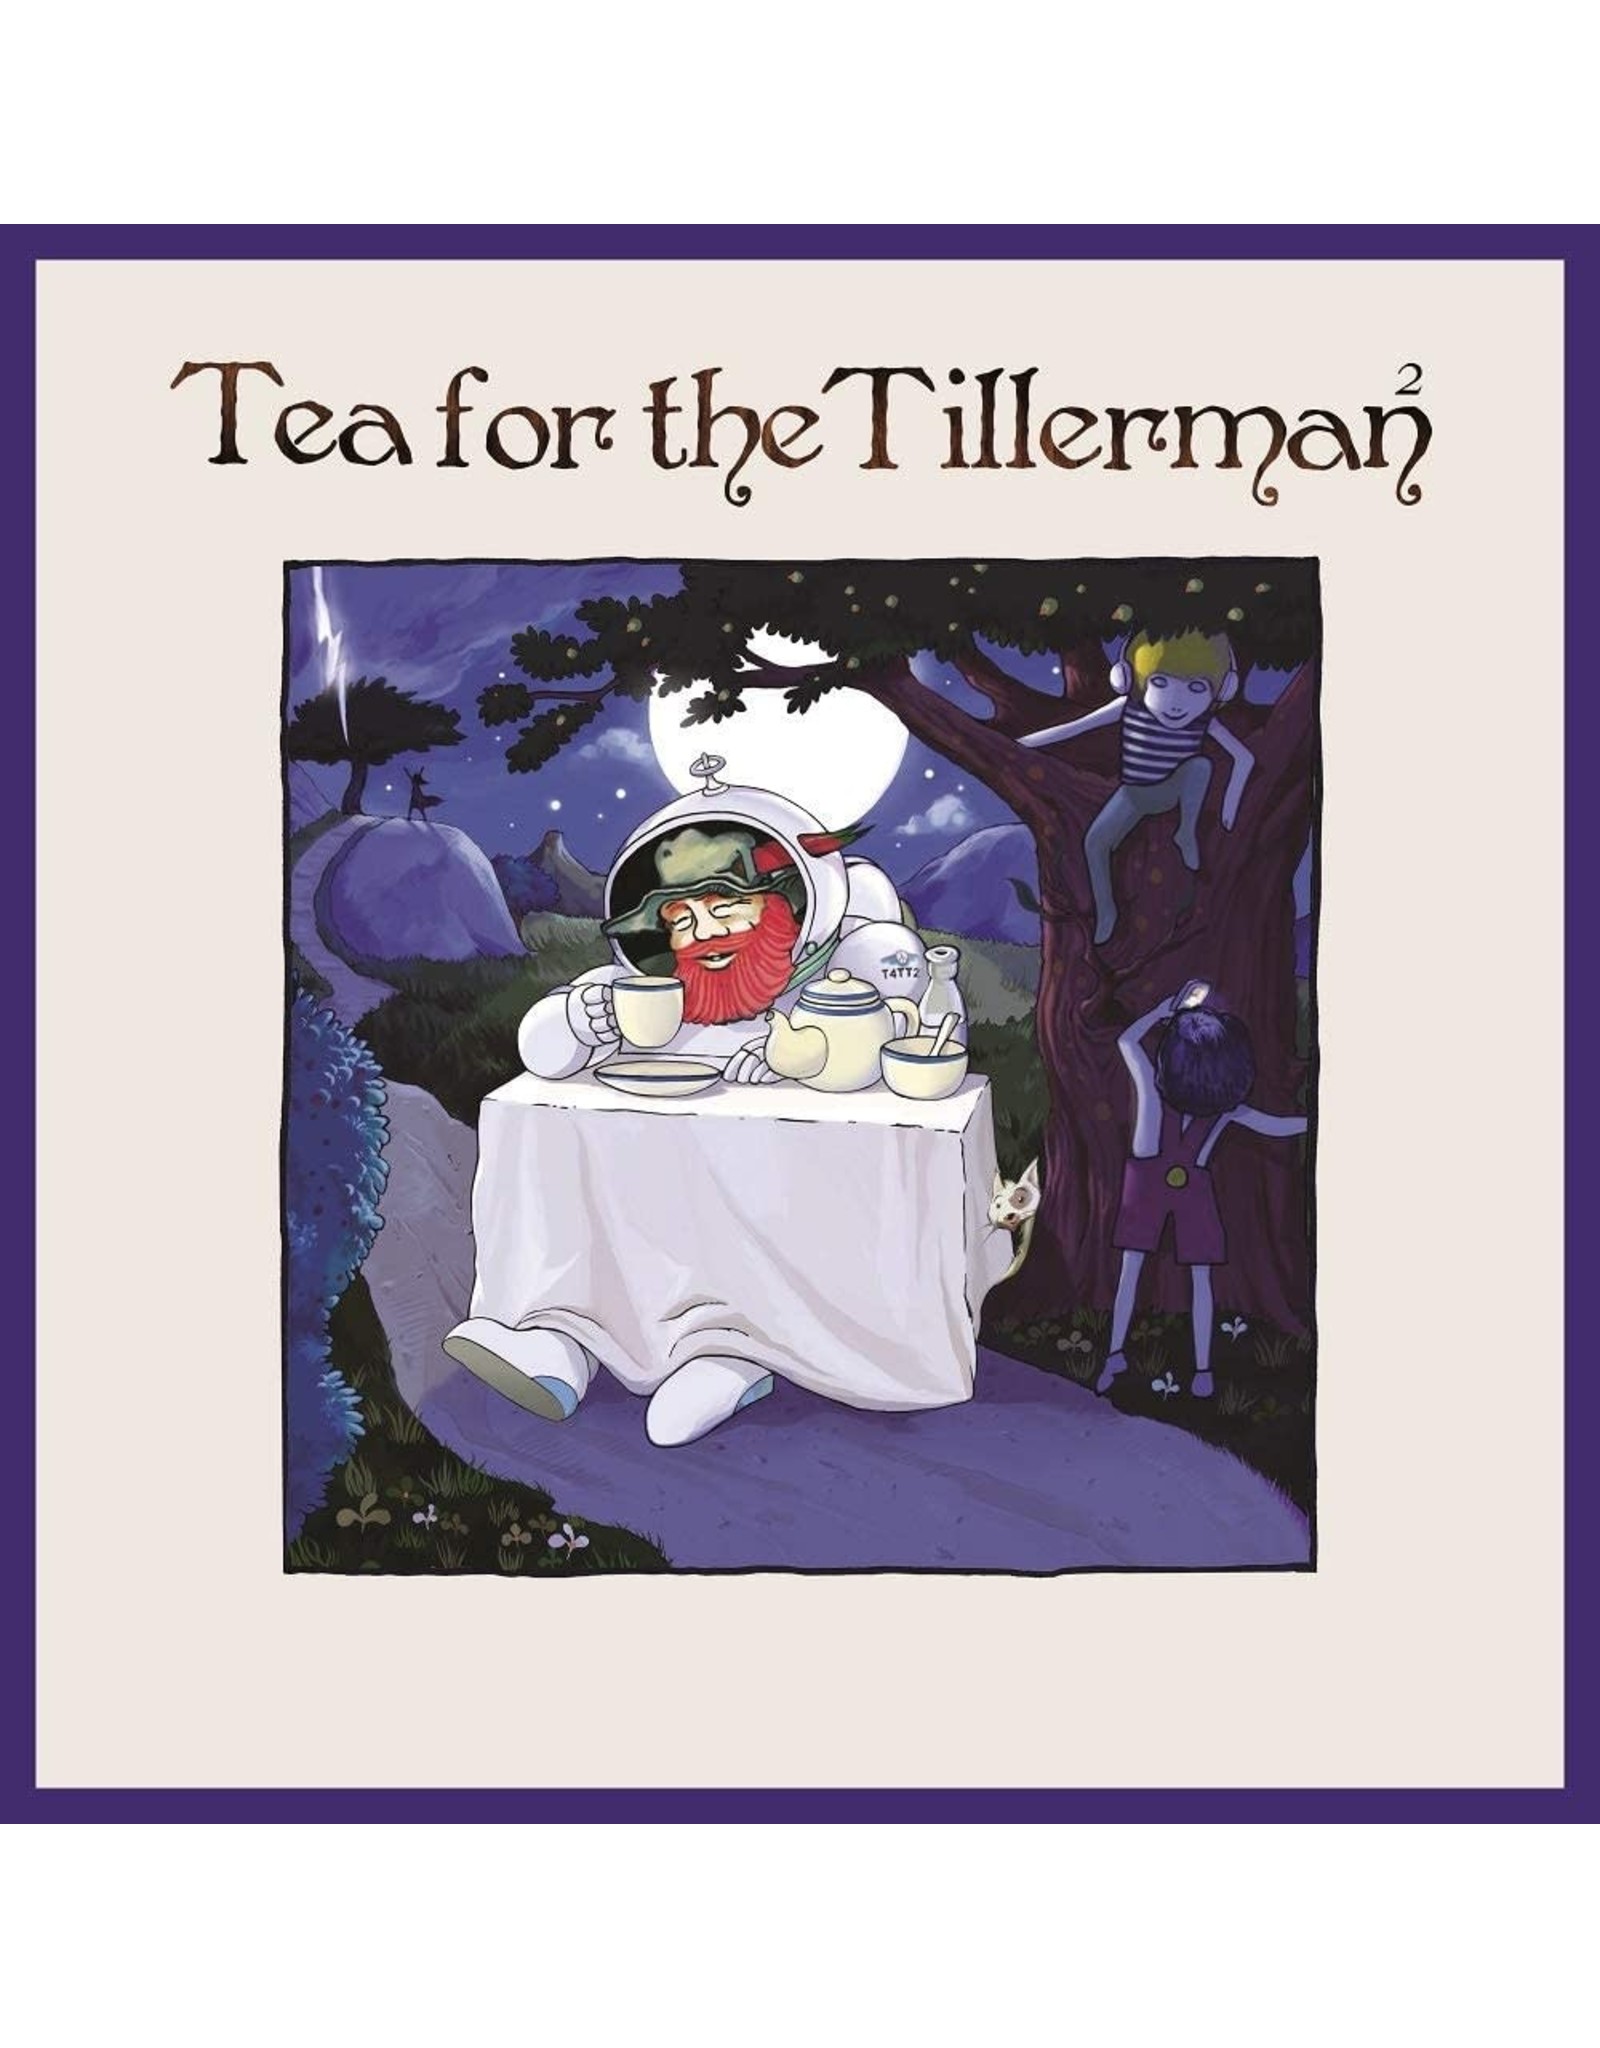 Cat Stevens - Tea For The Tillerman 2 (Exclusive Blue Vinyl)